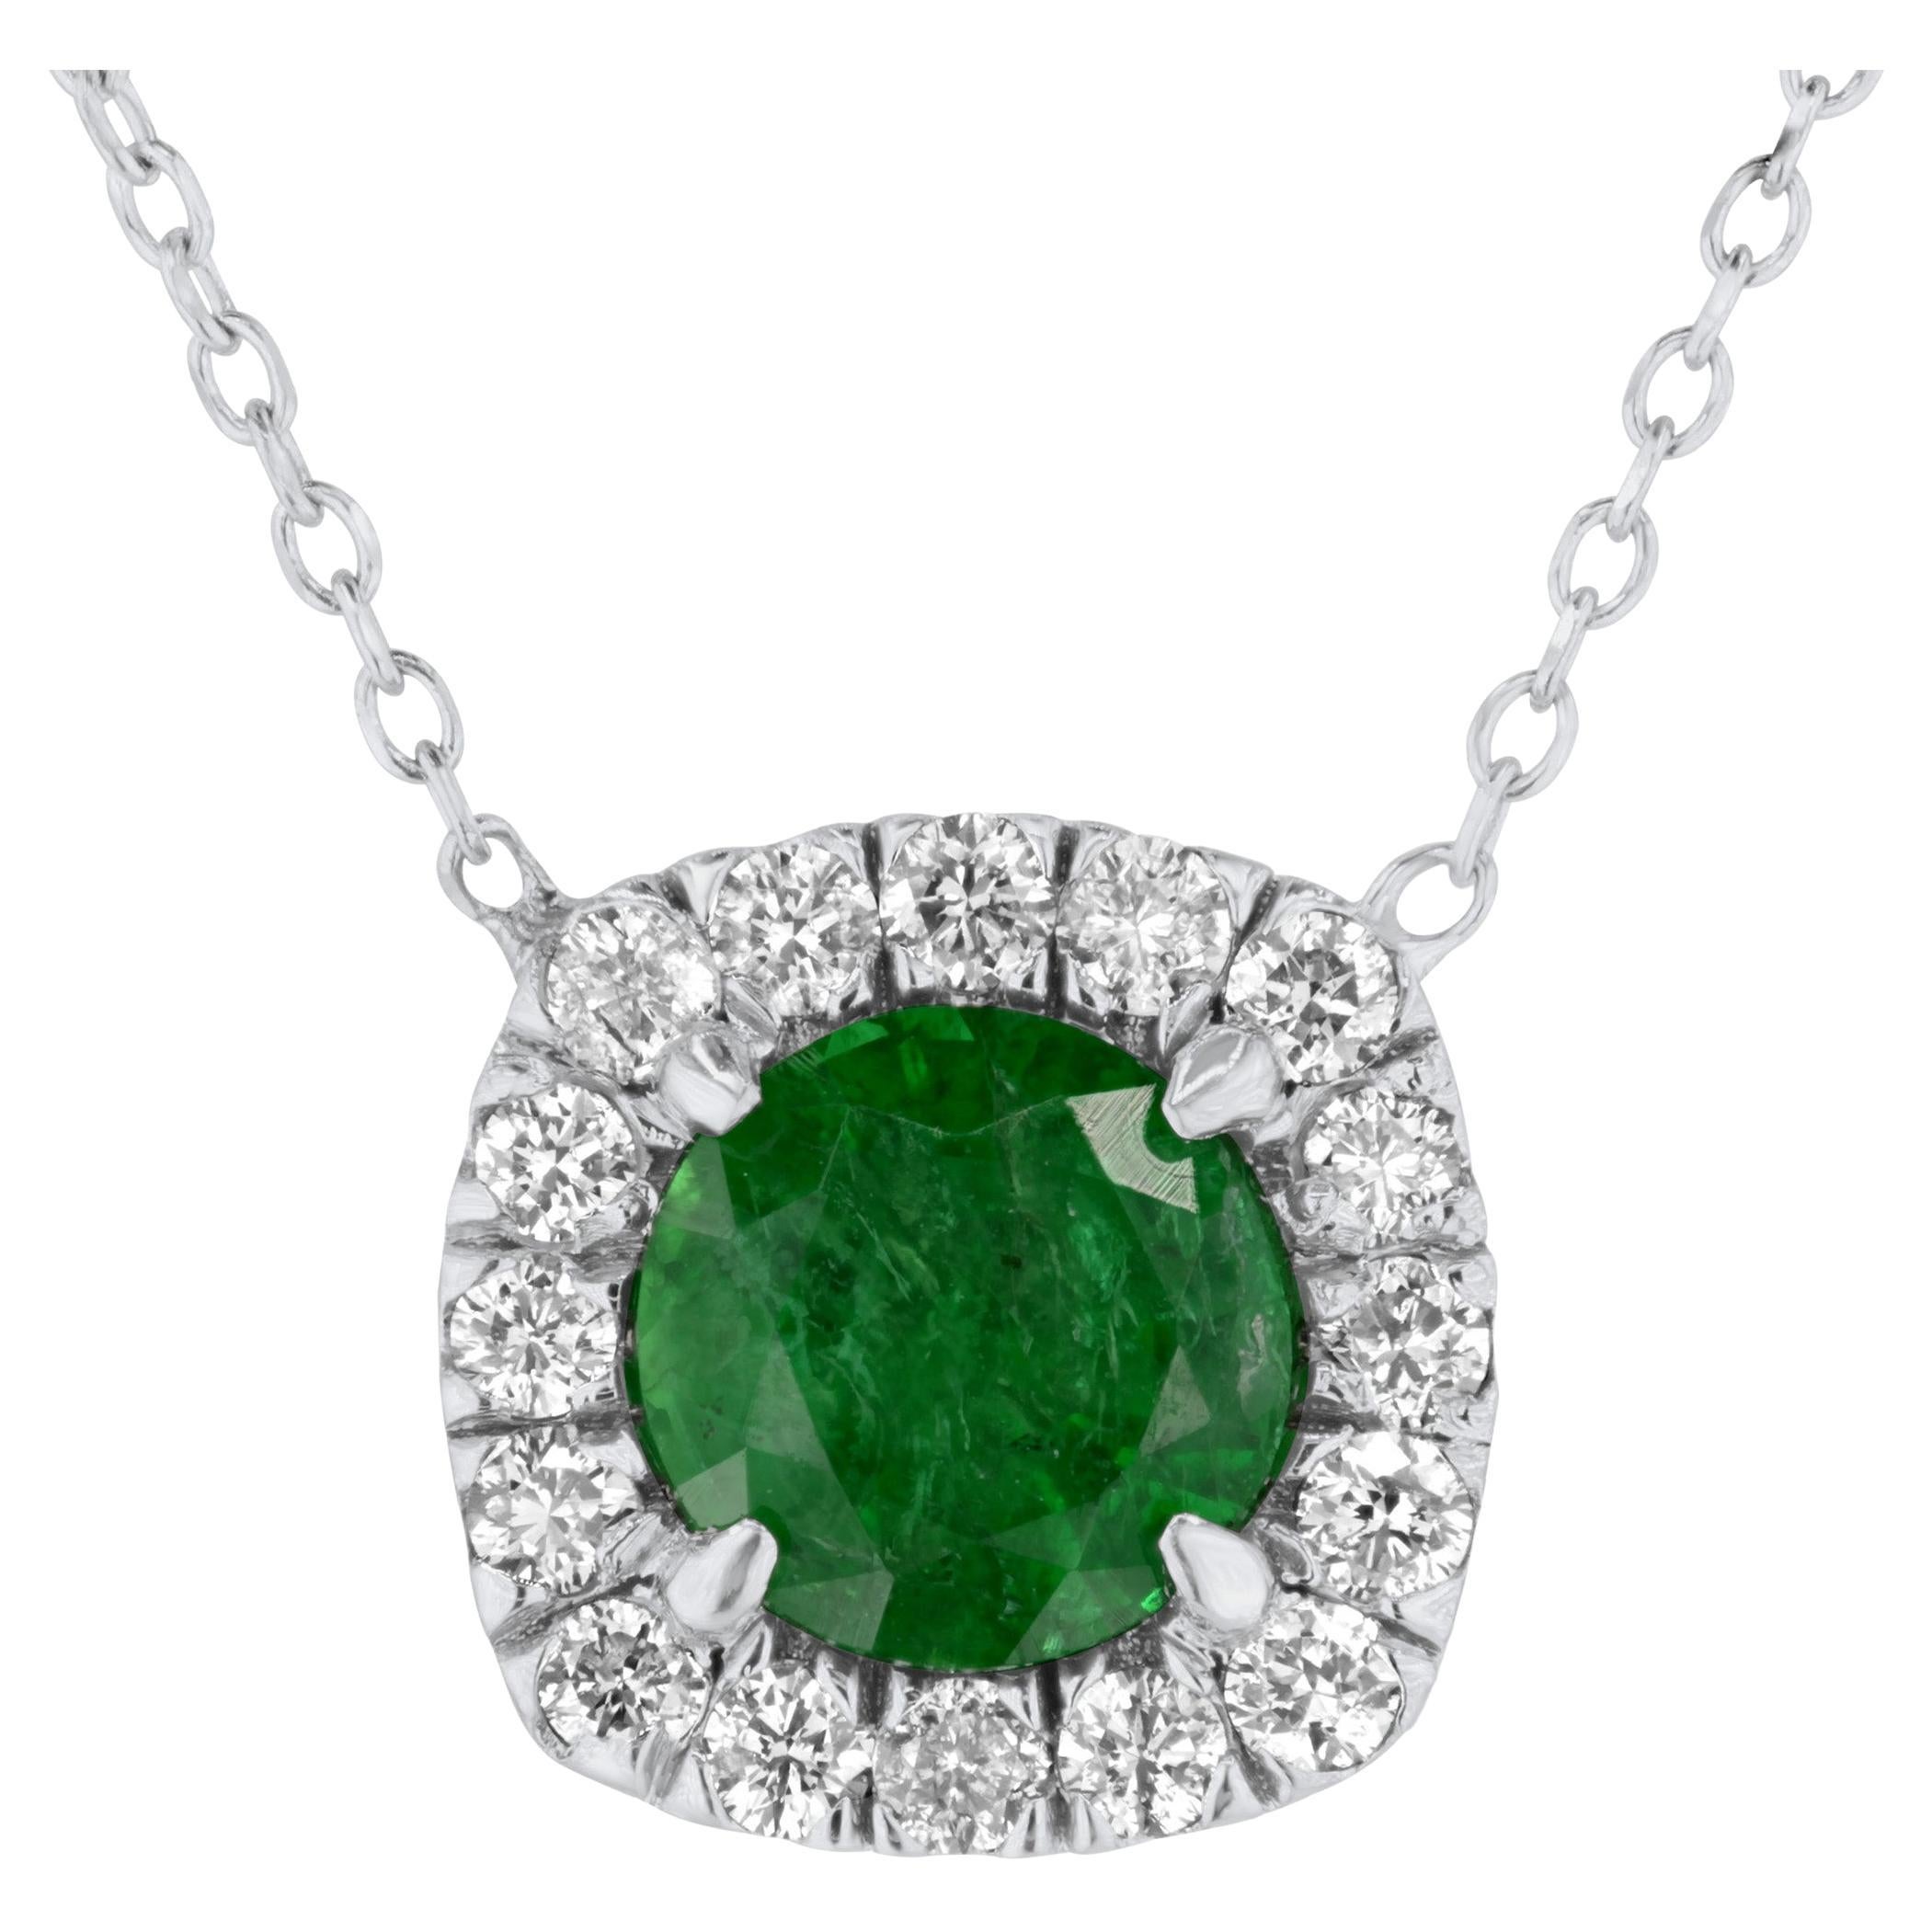 0.70 Carat Round Cut Emerald Pendant in Diamond Halo in 14k White Gold